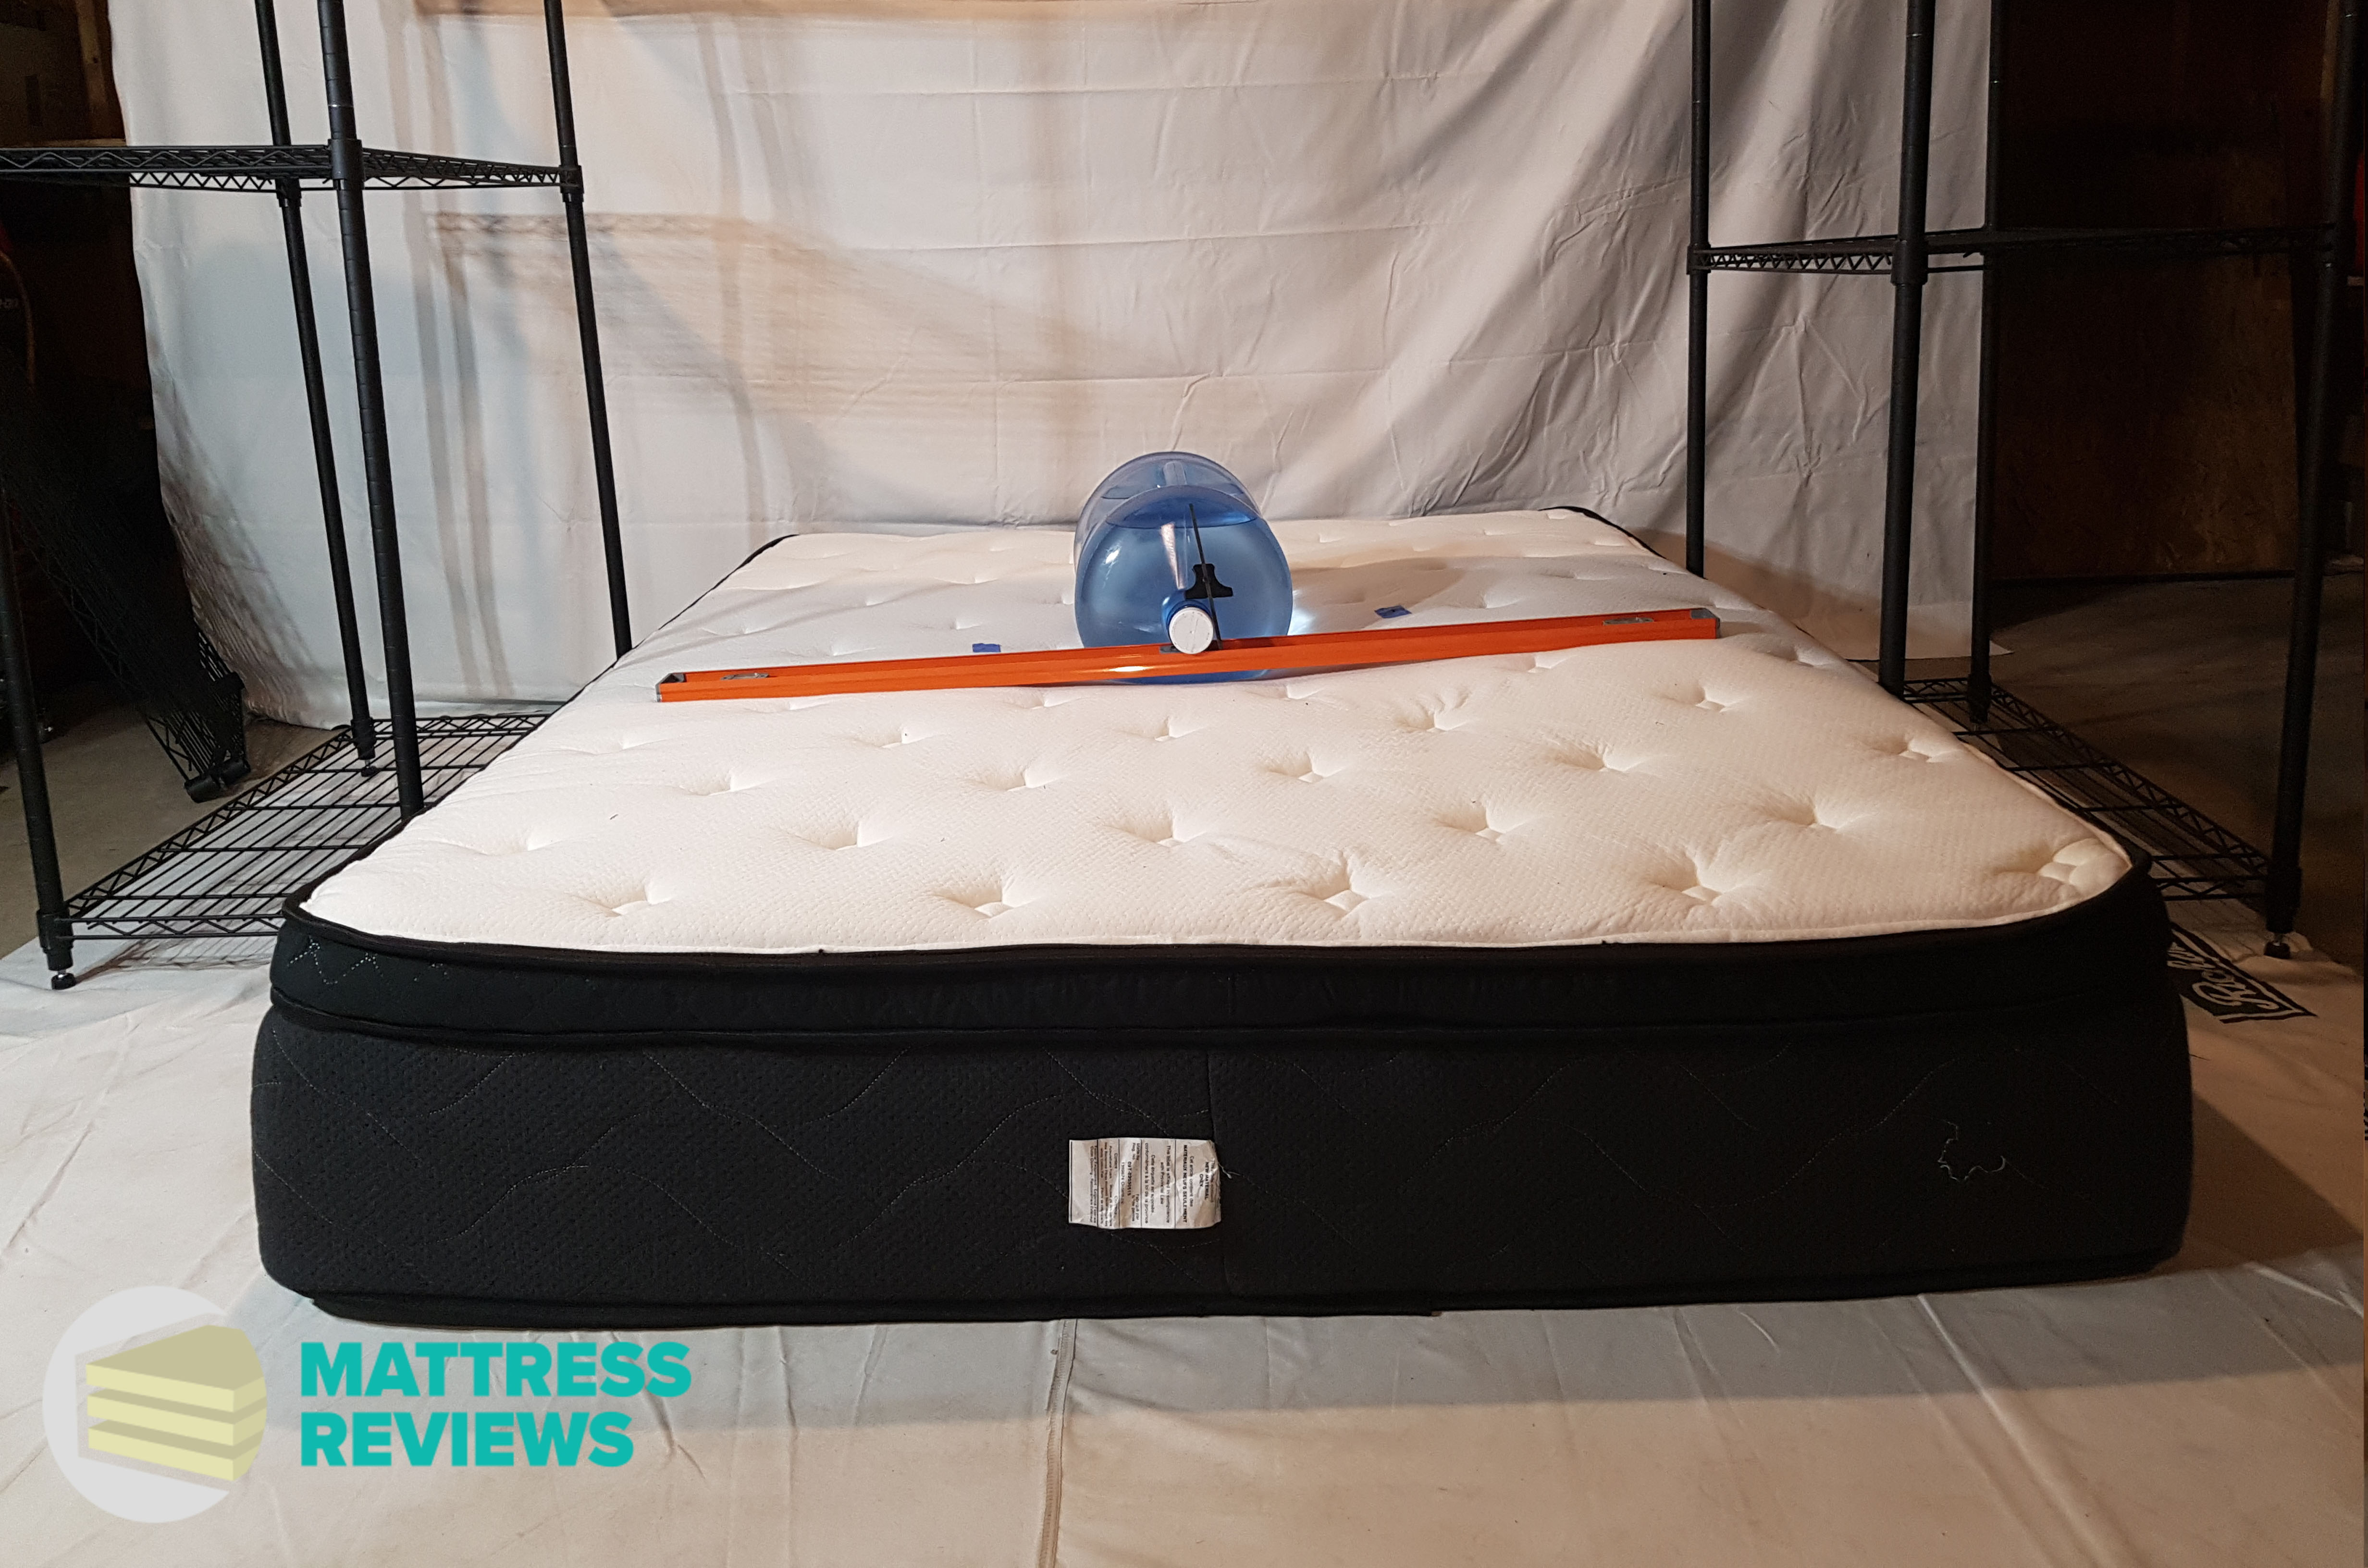 Image of the Hamuq mattress firmness test.